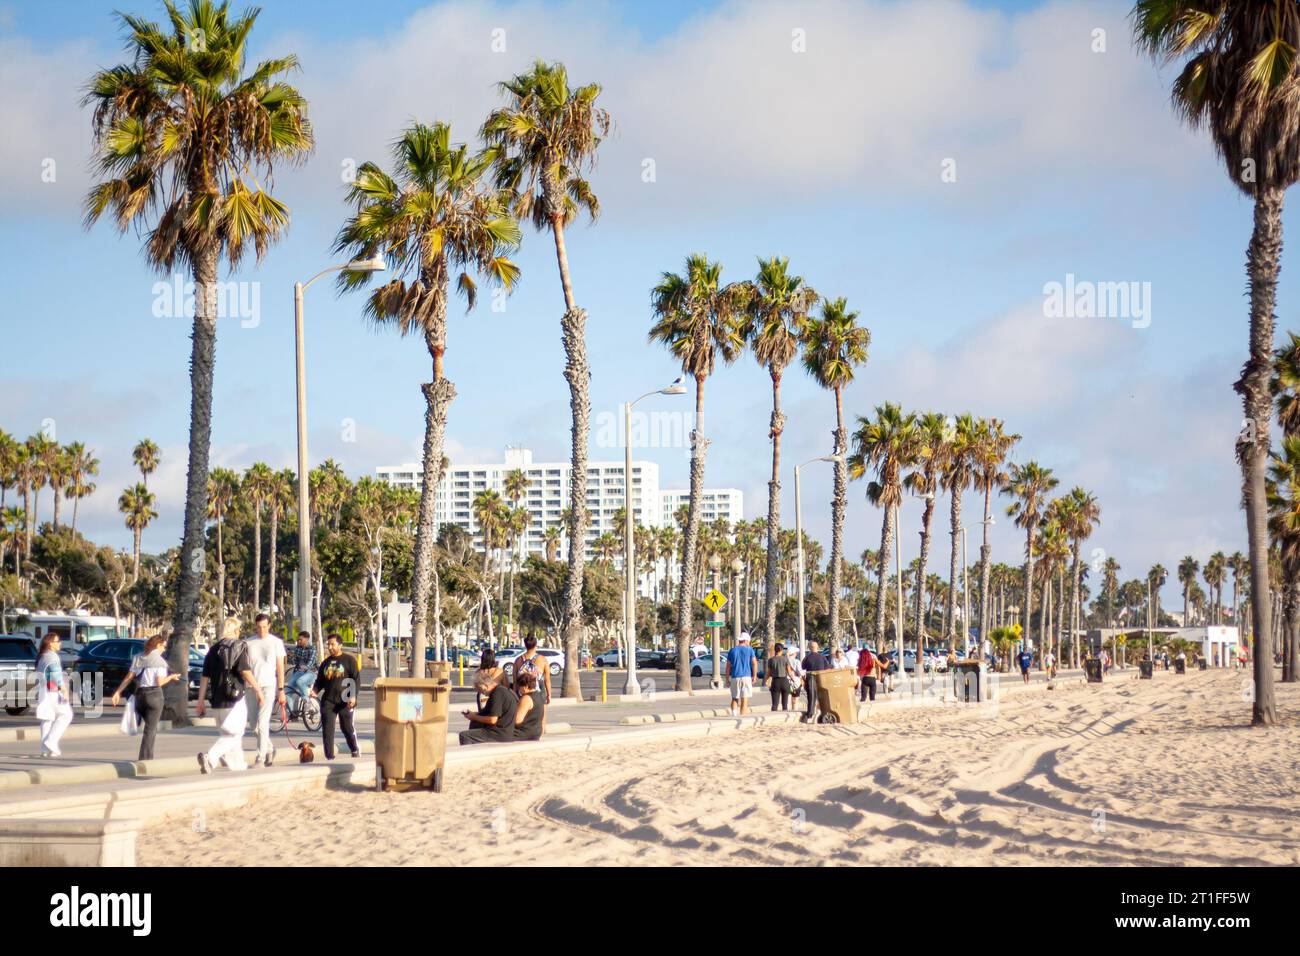 Walking under the palm trees at Santa Monica Beach, California Stock Photo